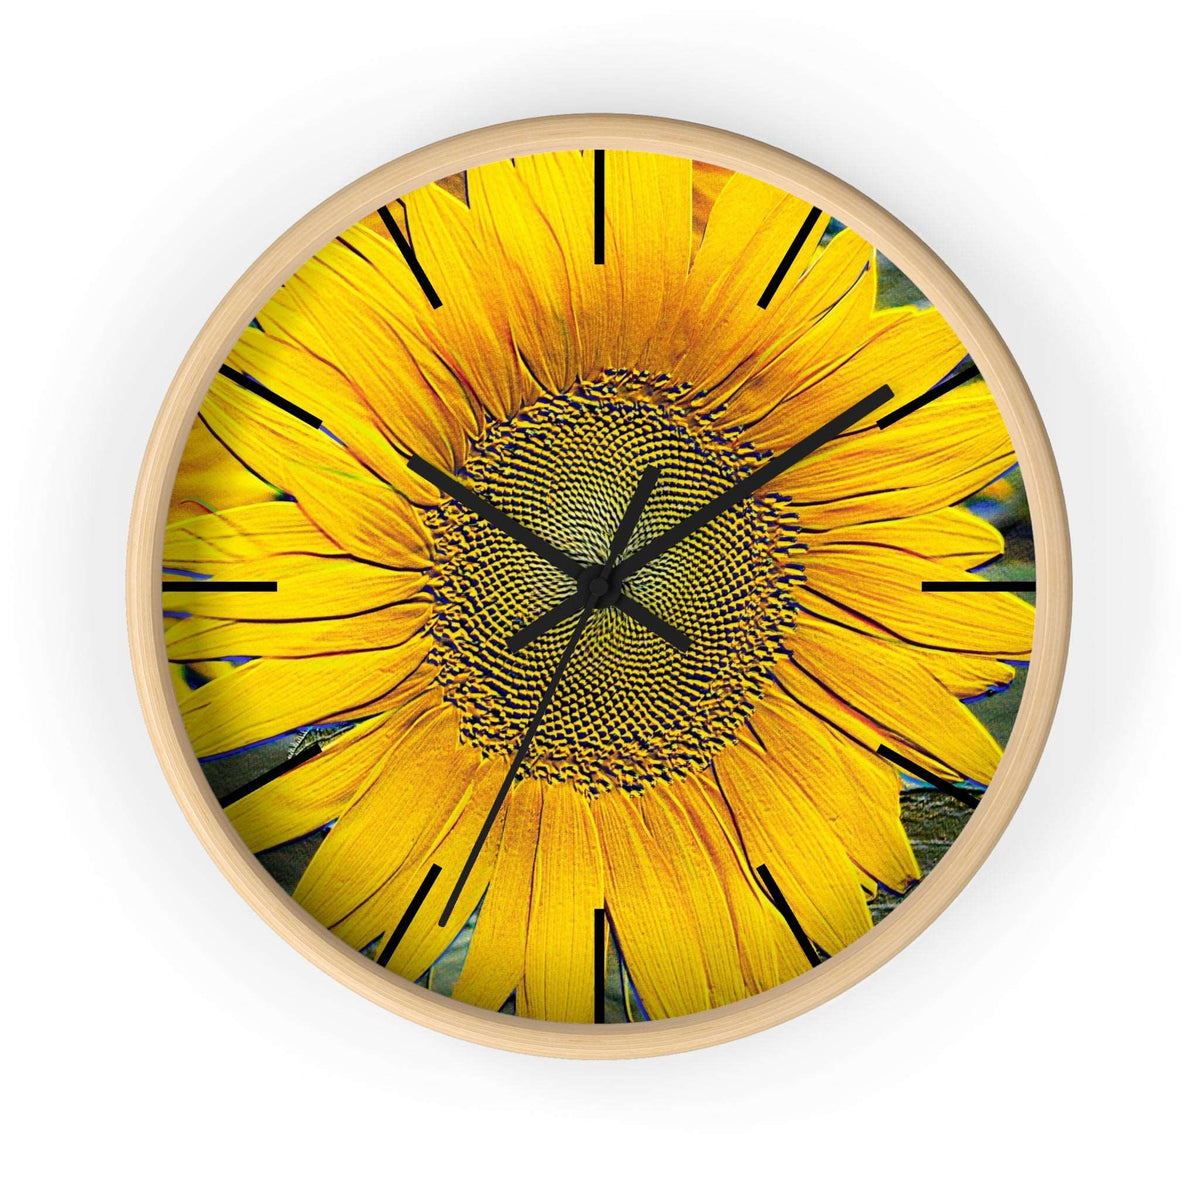 'Sunflower' Wall Clock Home Decor 1ArtCollection